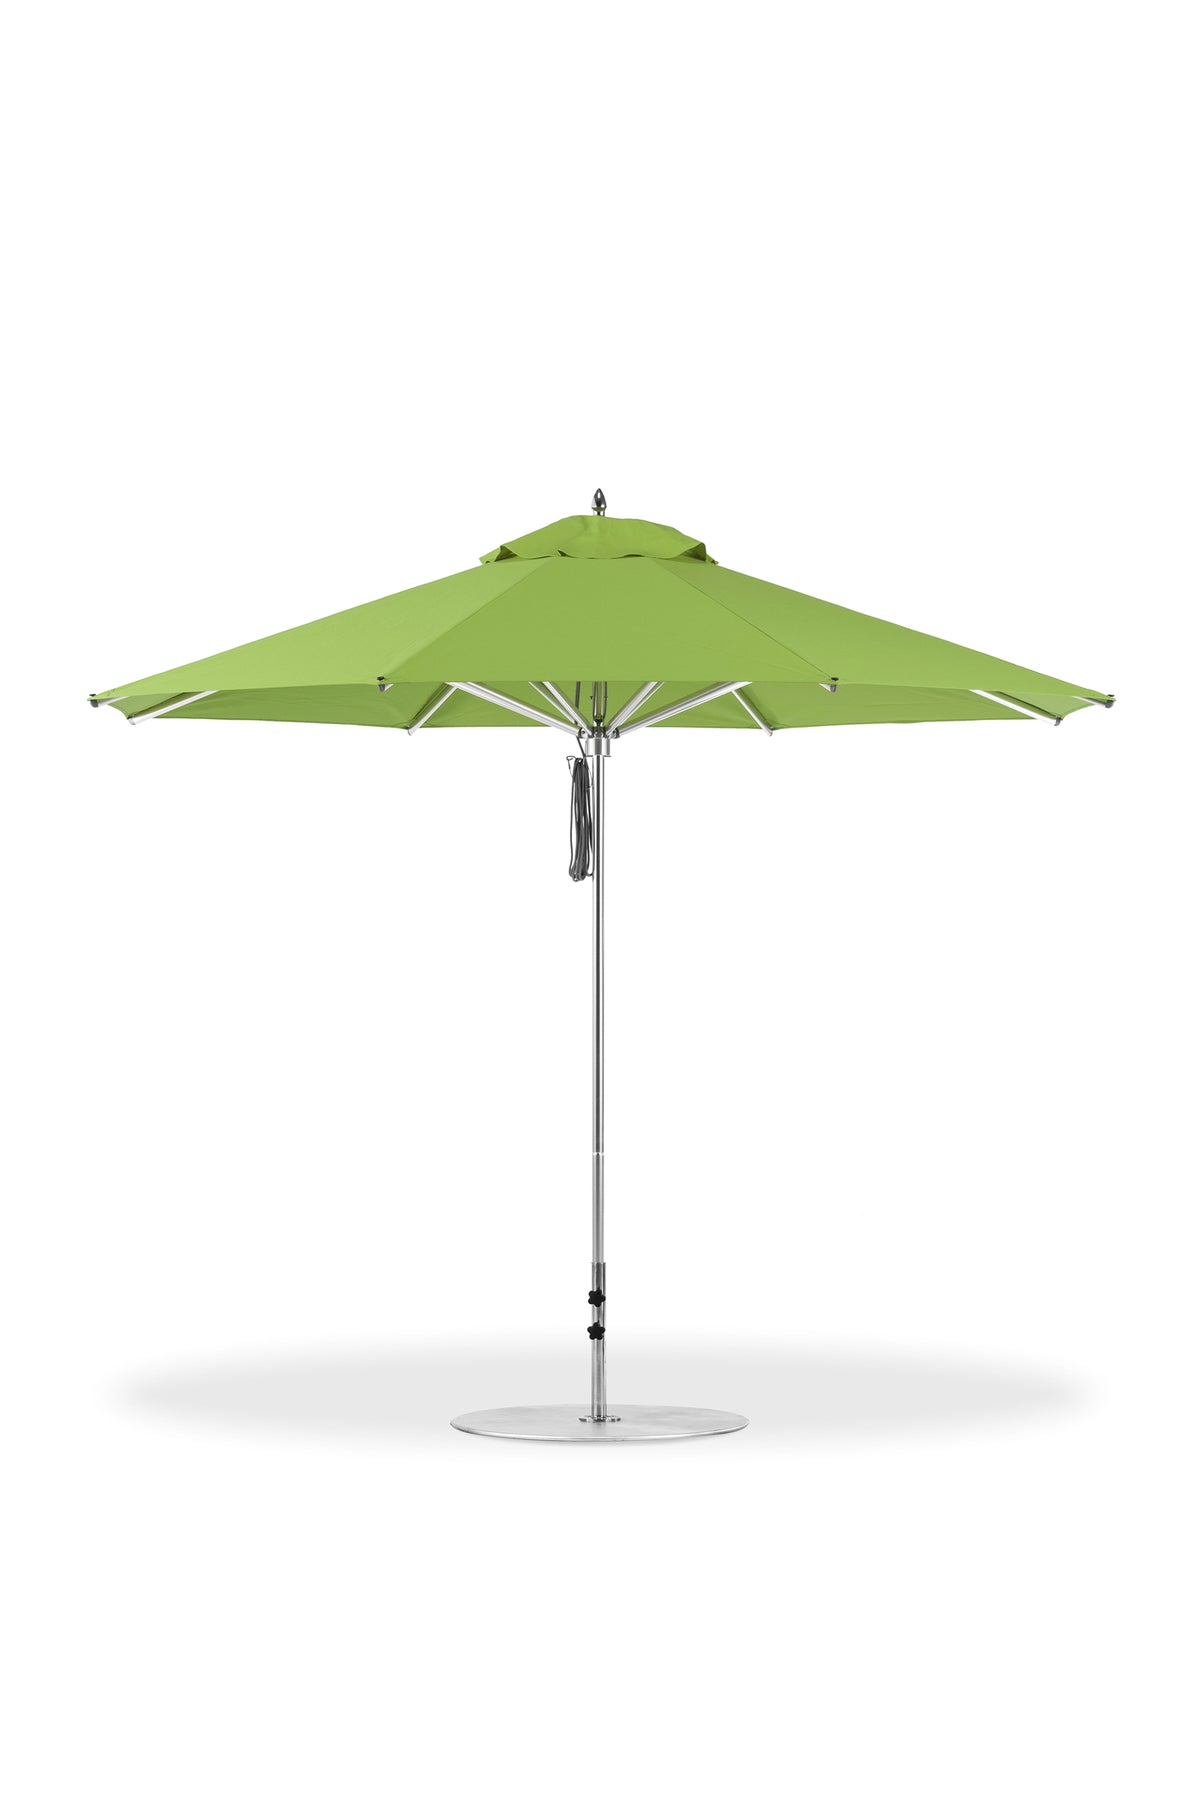 Frankford Greenwich Market Umbrella - Octagon